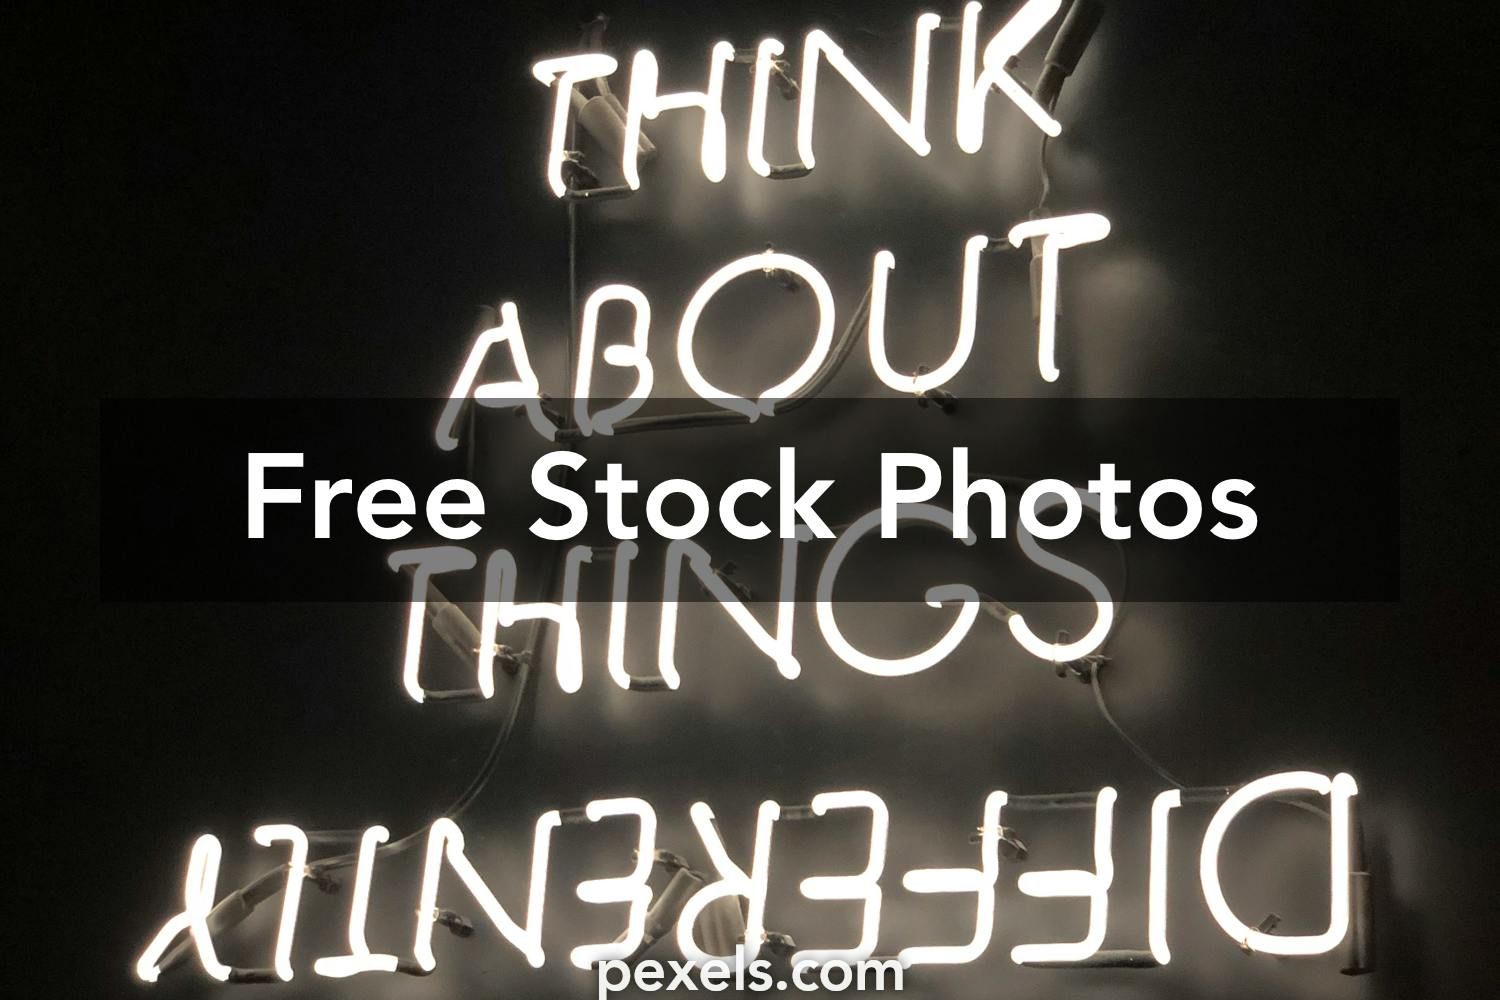 1,000+ Best Quotes Photos · 100% Free Download · Pexels Stock Photos